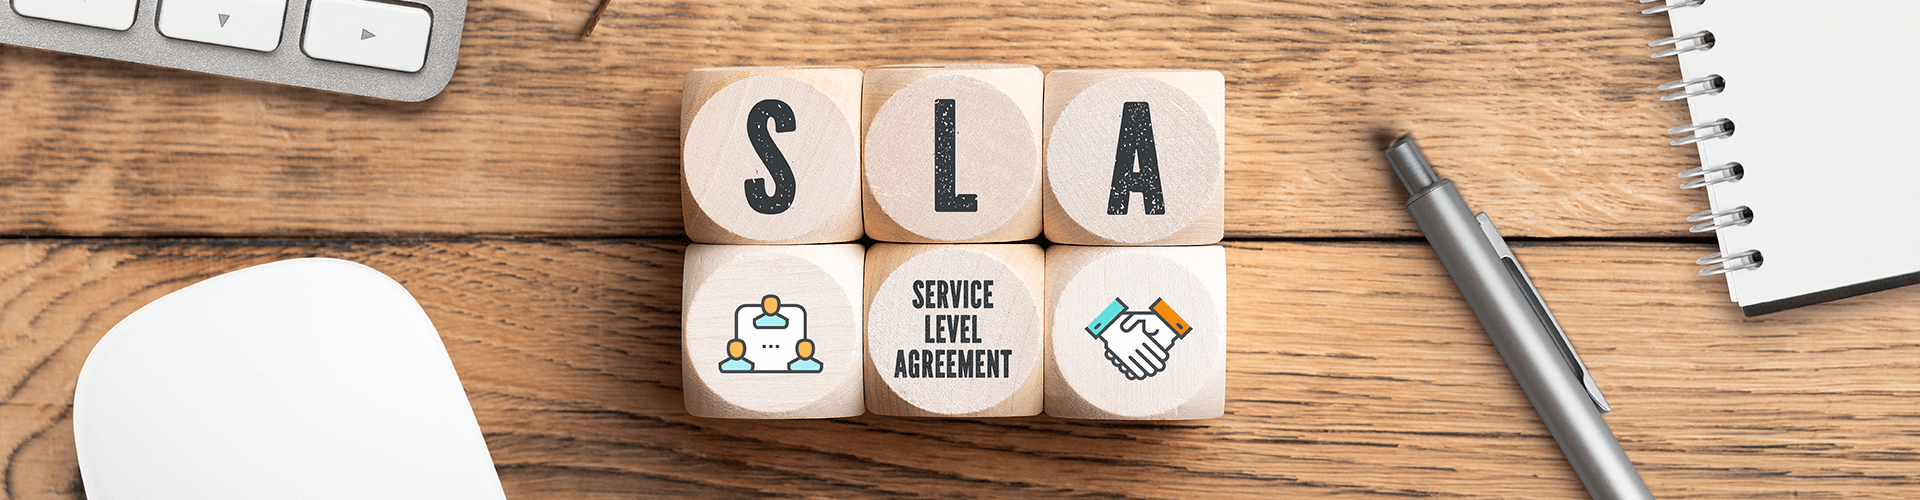 service level agreement sla